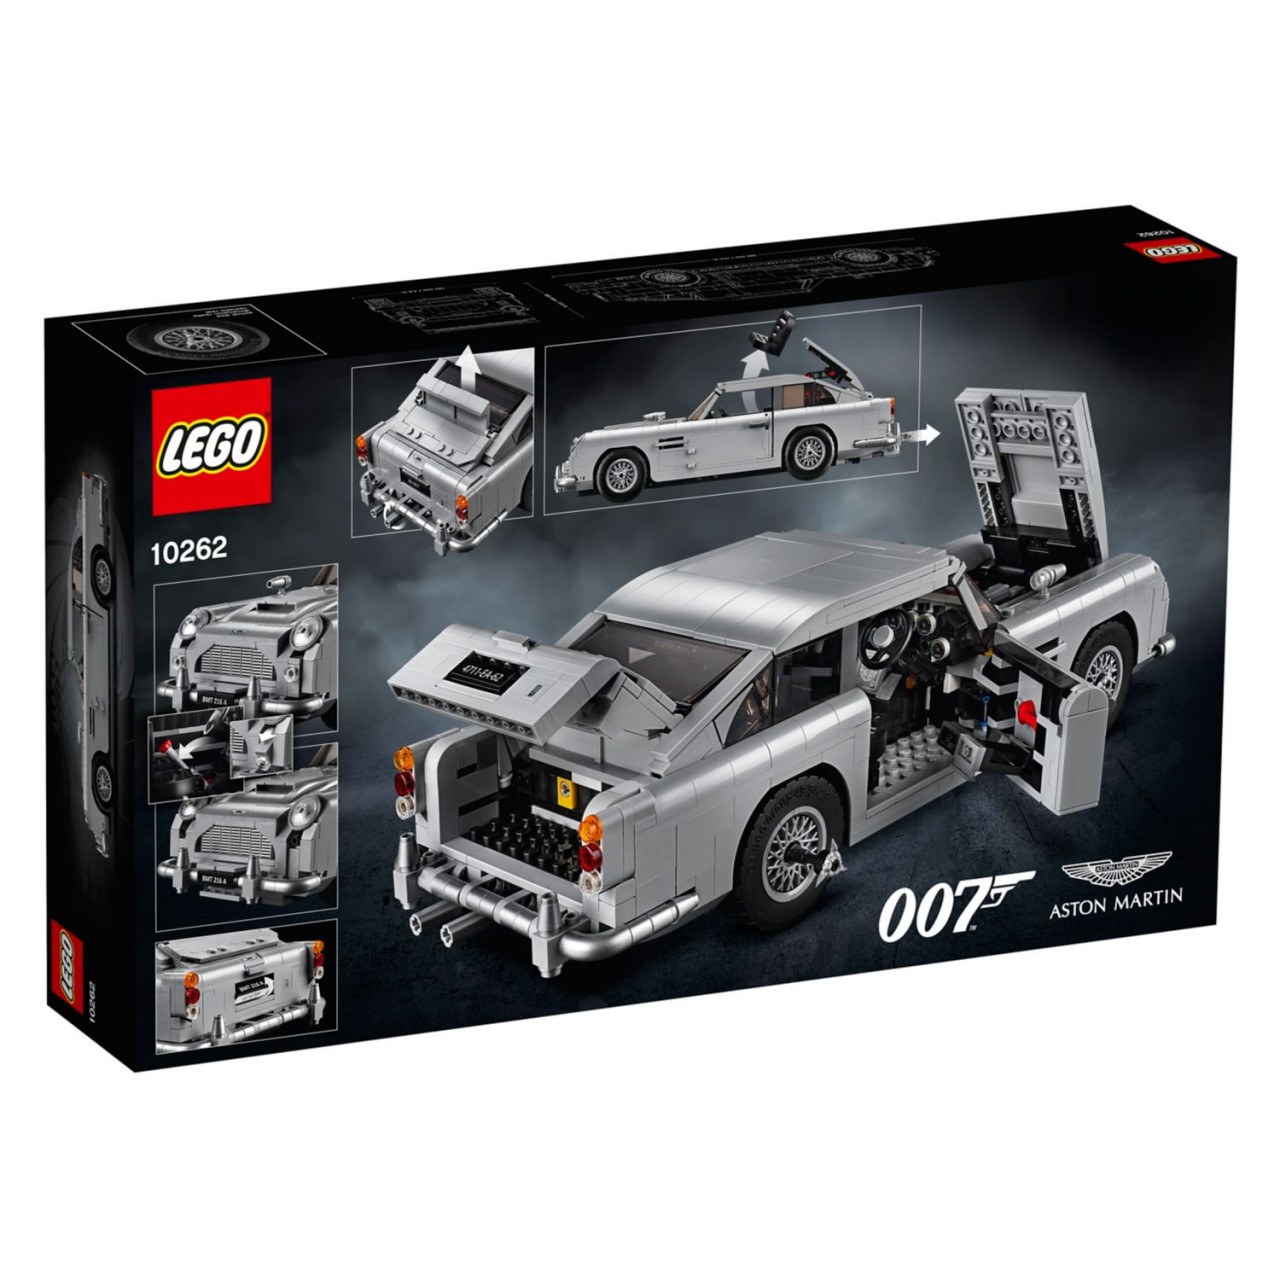 LEGO CREATOR 10262 James Bond Aston Martin DB5